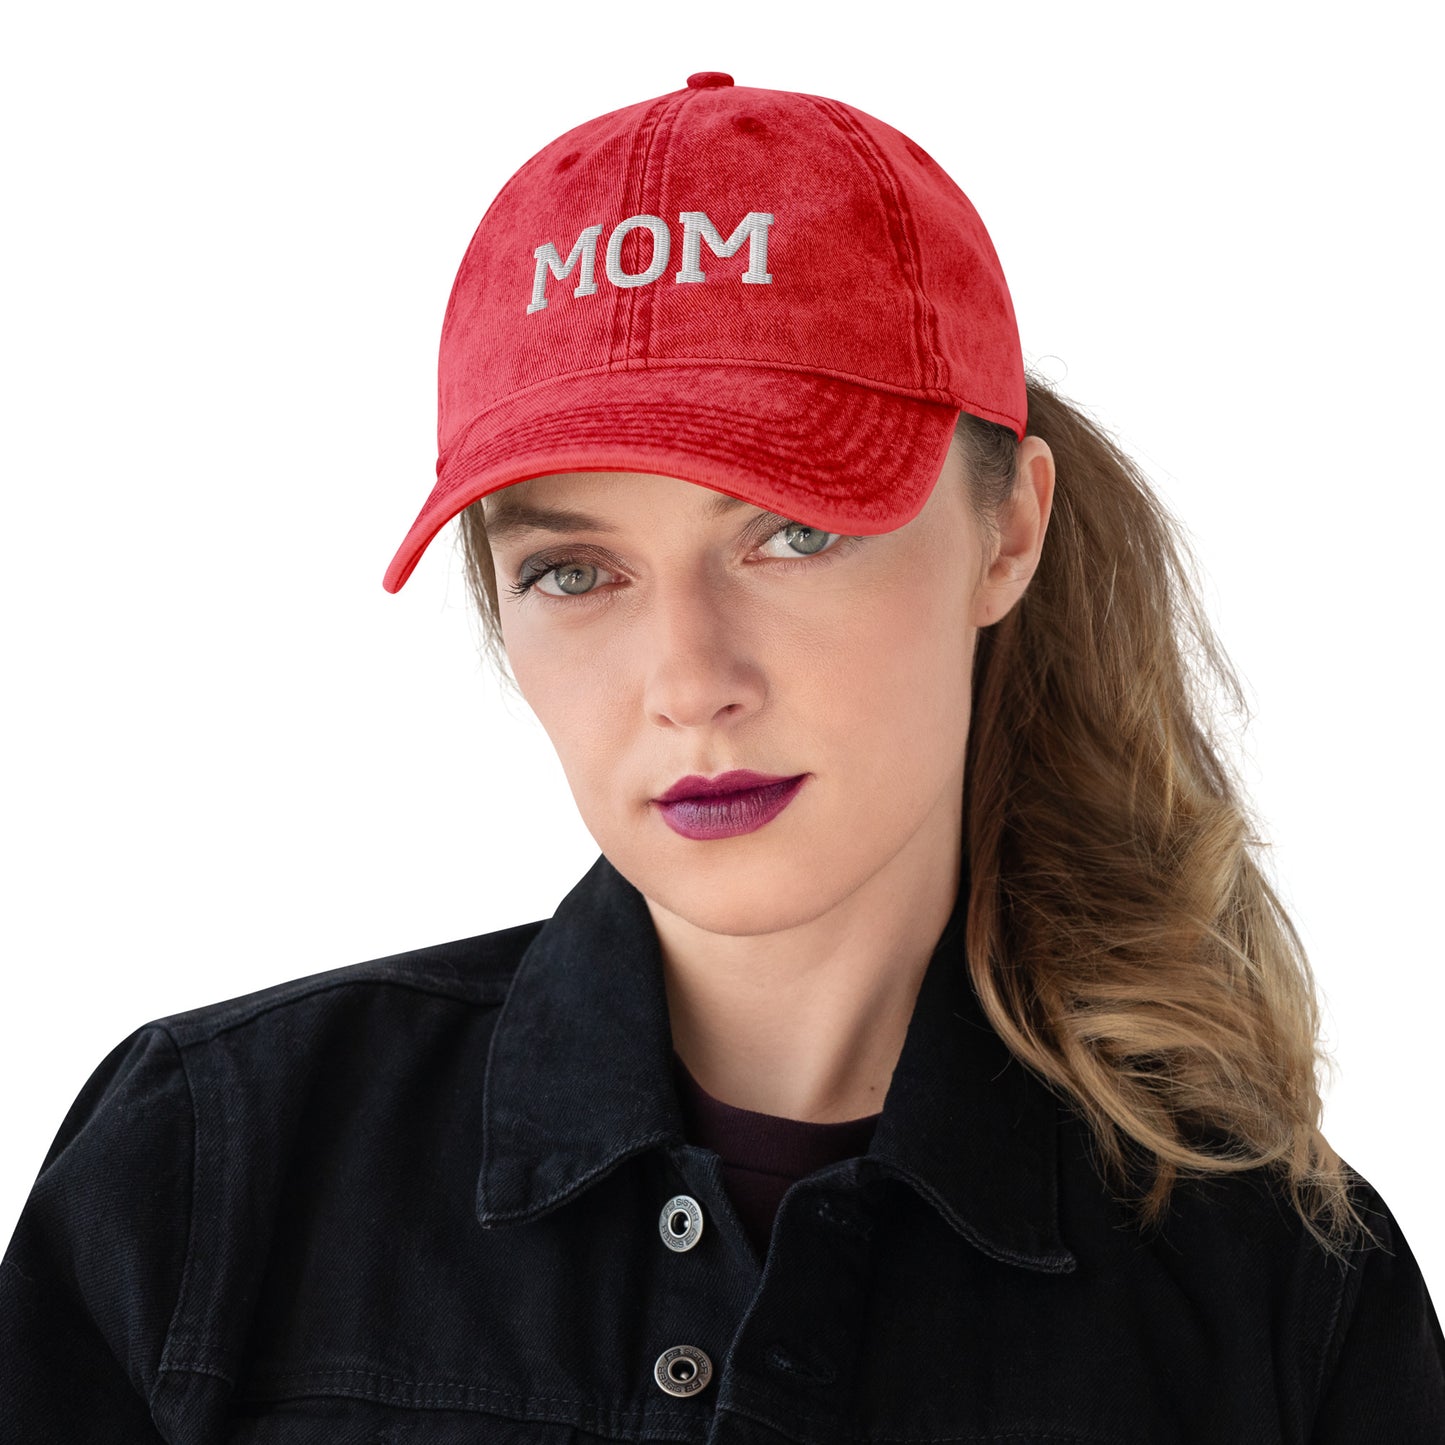 Mom Embroidered Cotton Twill Cap